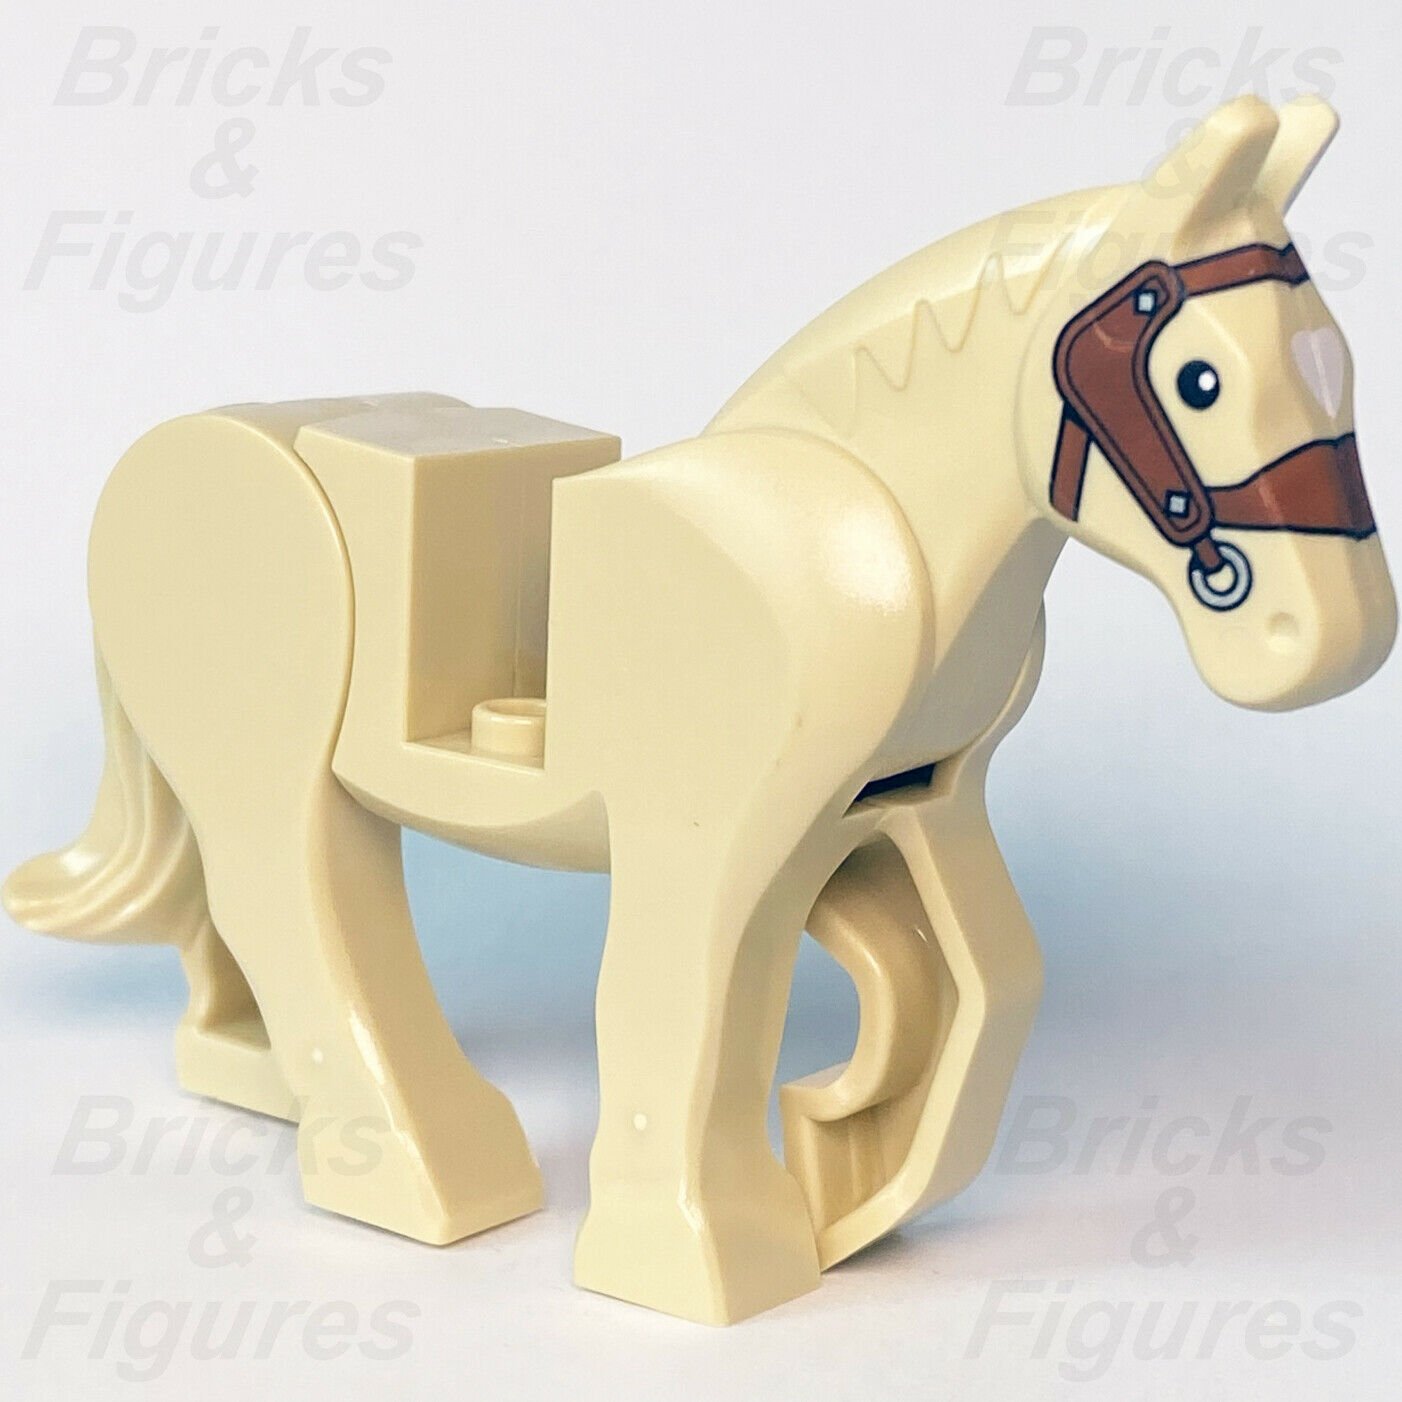 Ideas LEGO Horse with Movable Legs & Bridle Animal Tan Minifigure Part 21325 - Bricks & Figures